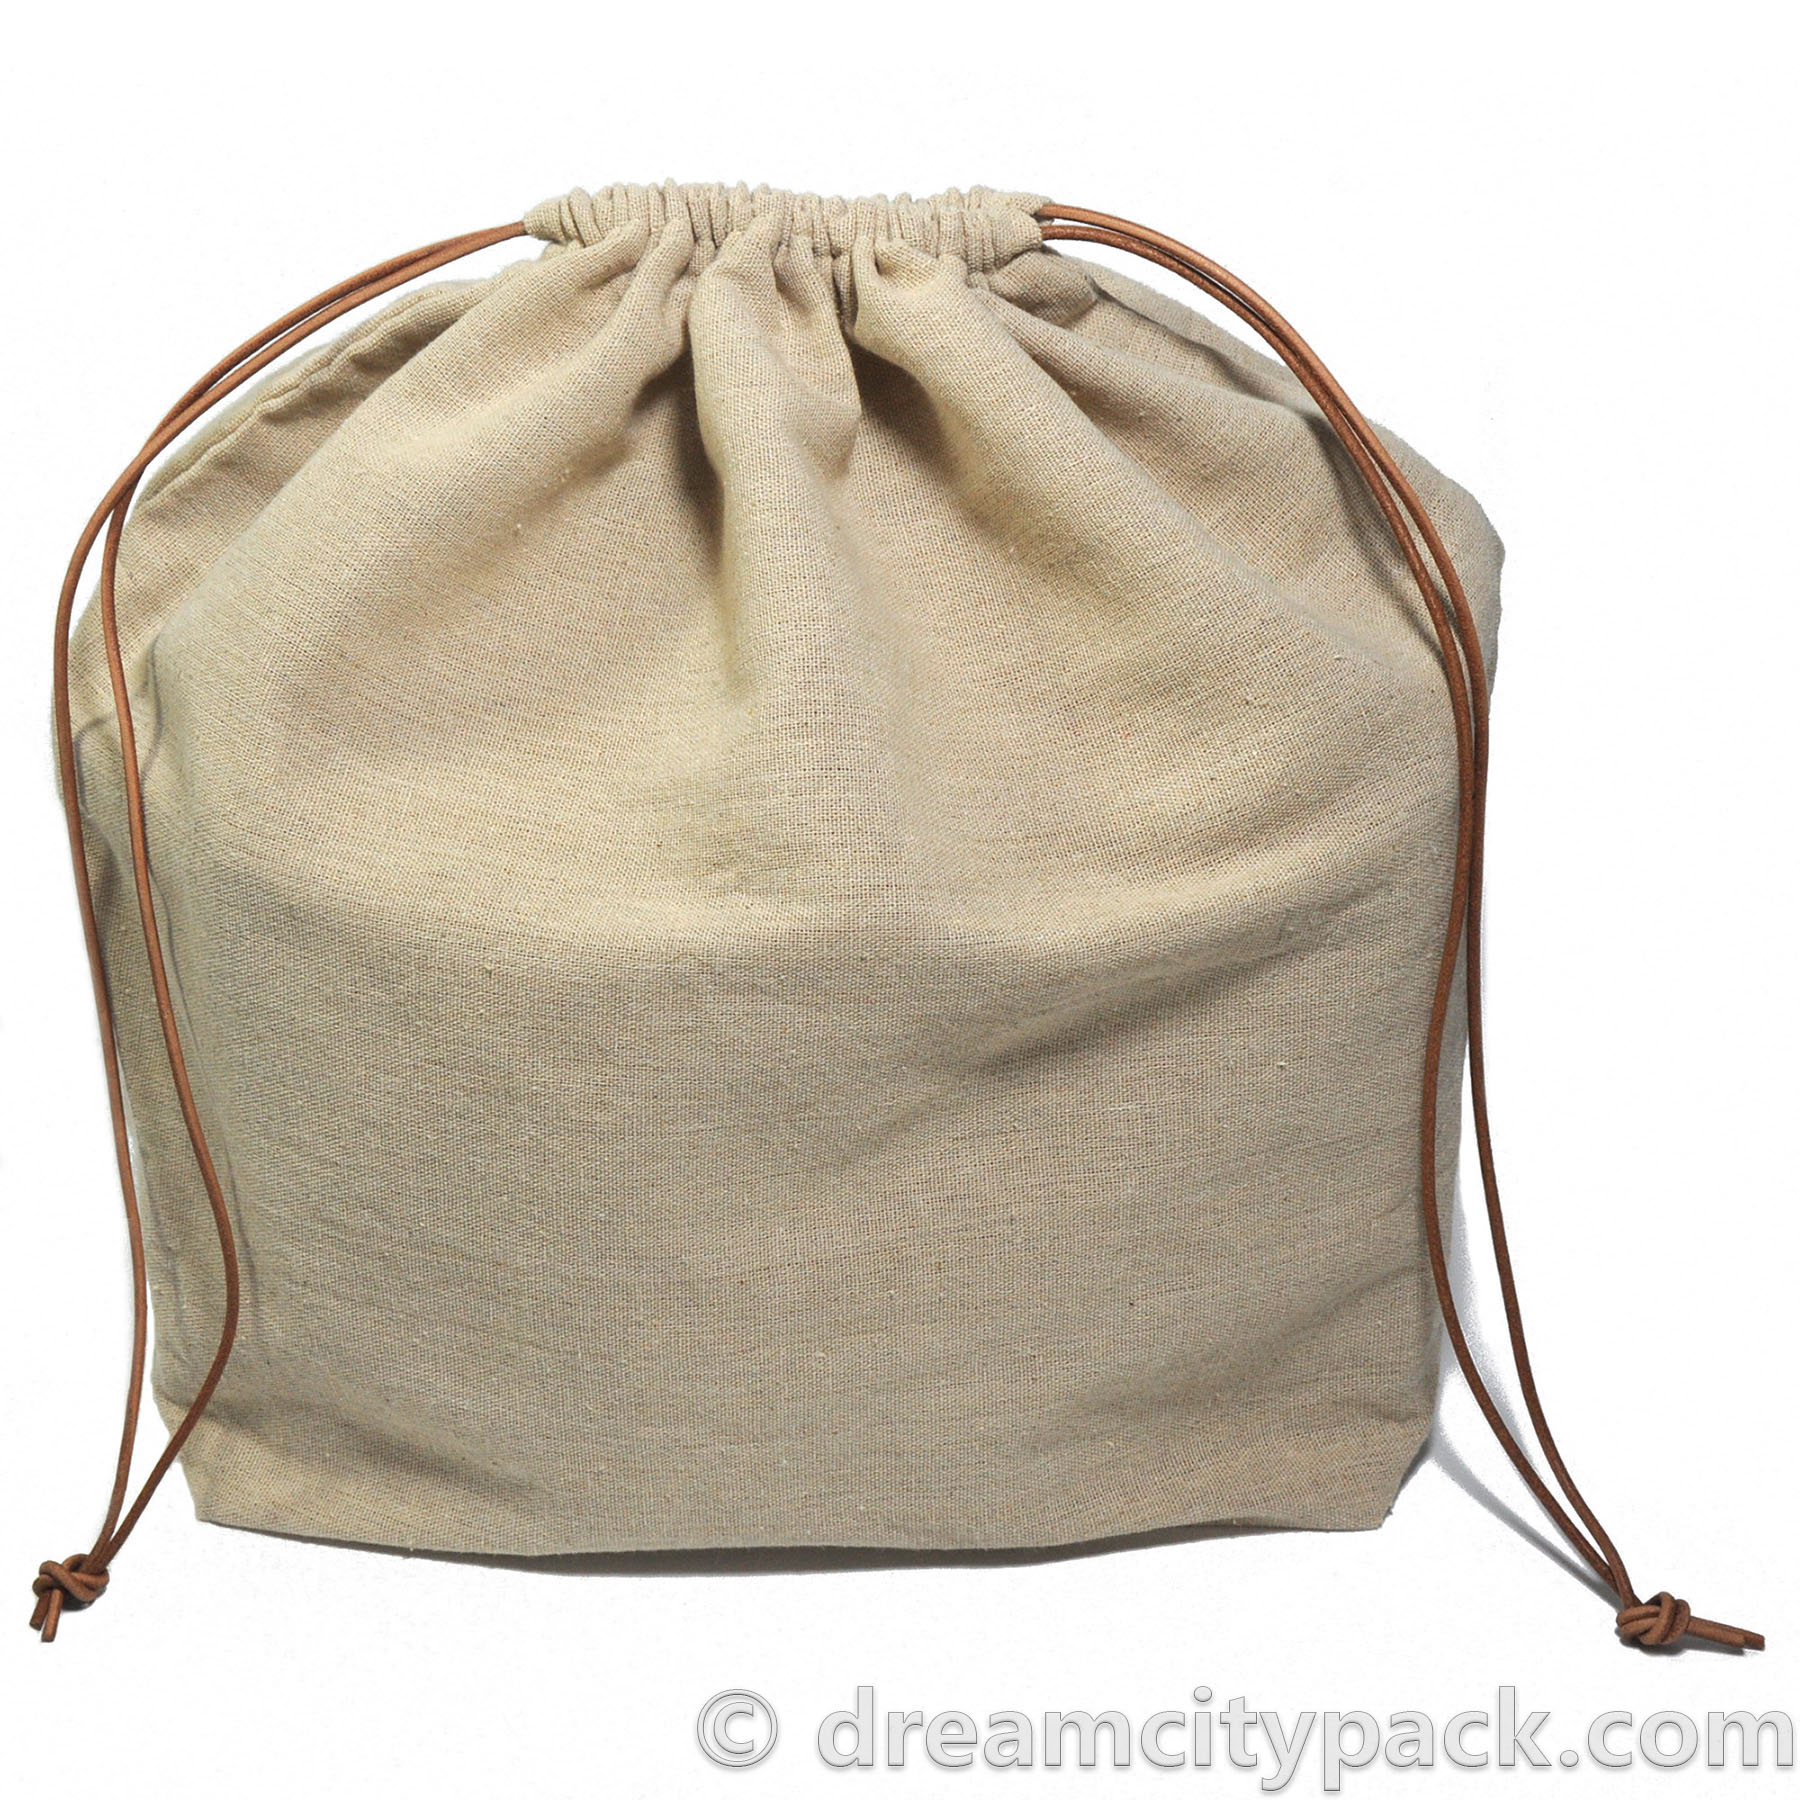 Wholesale Dust Bags For Handbags